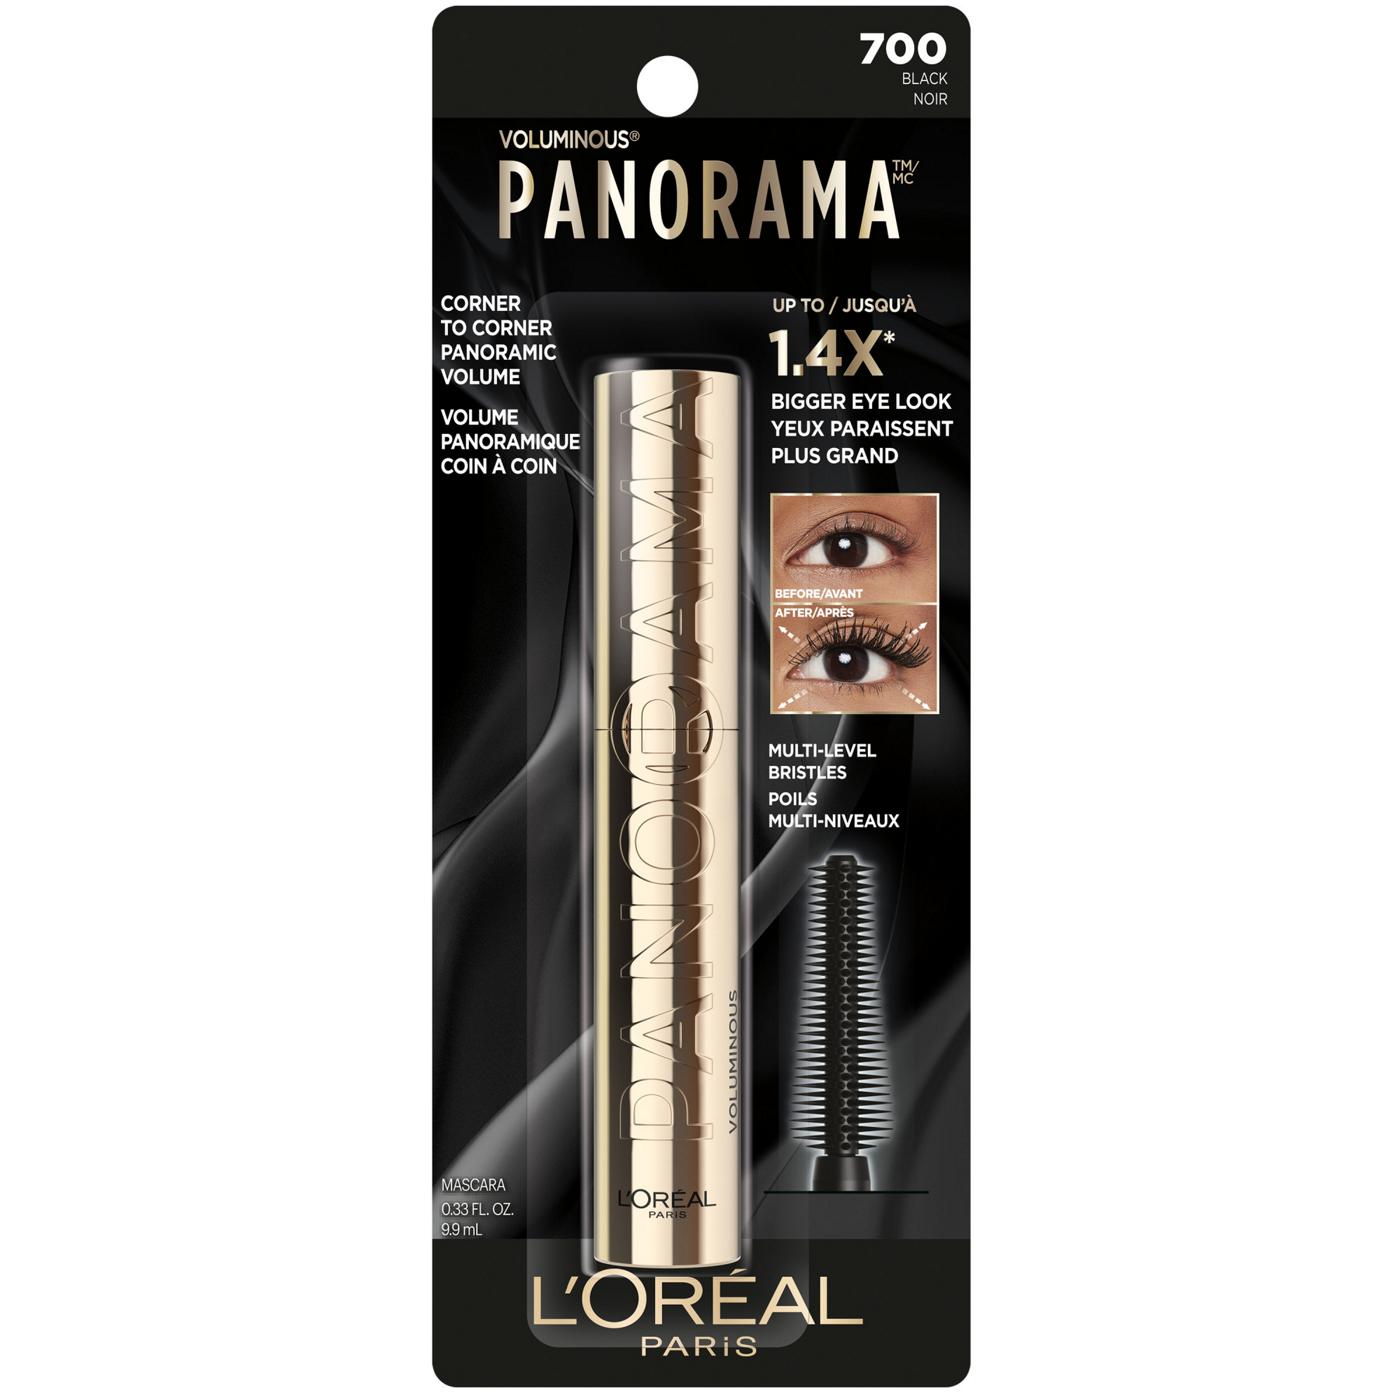 L'Oréal Paris Voluminous Panorama Mascara, Washable, Volumizing Black; image 1 of 7